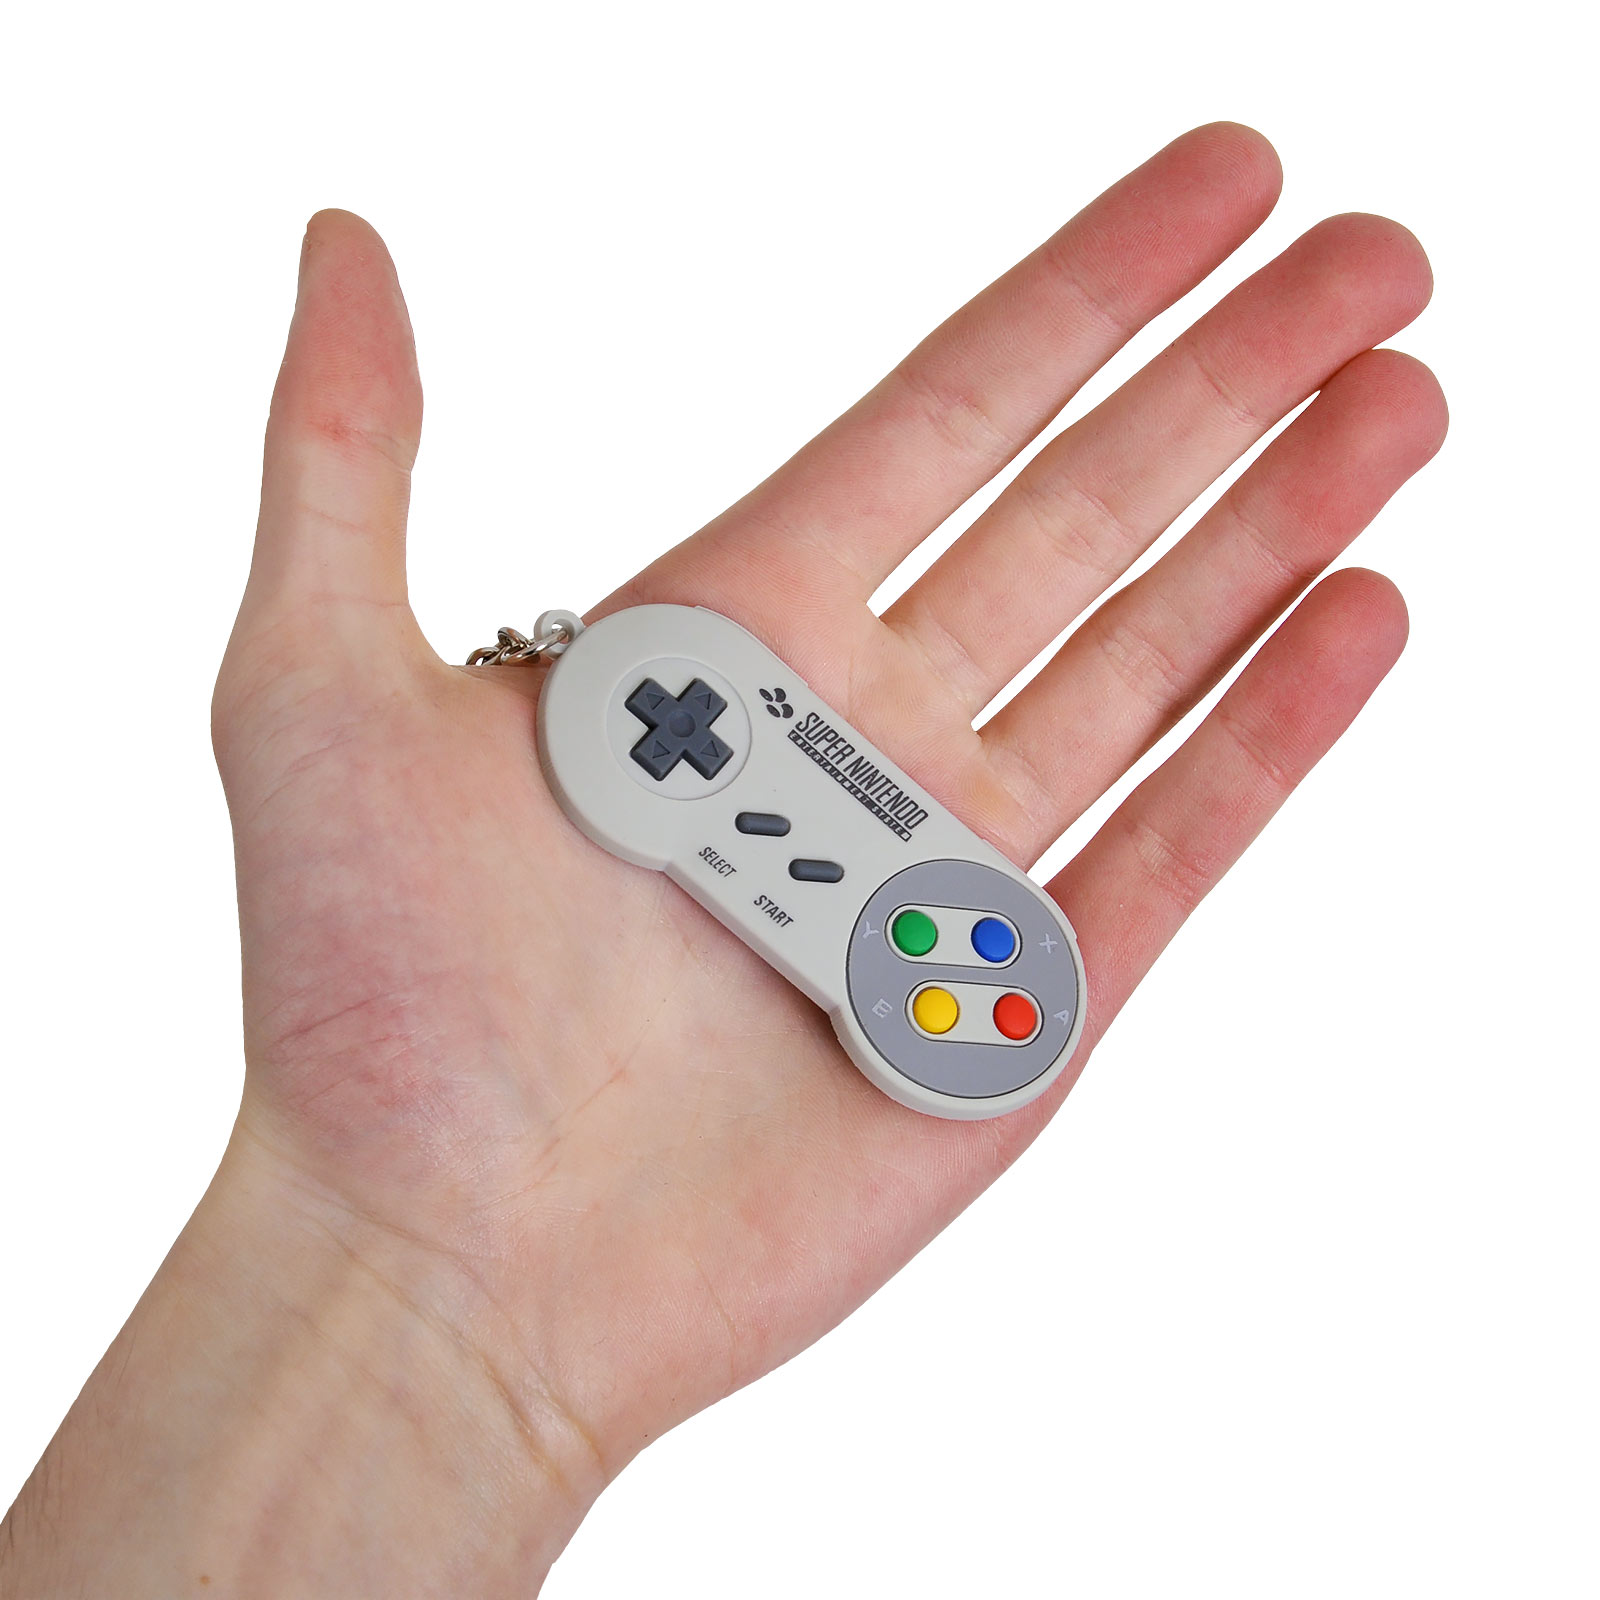 Nintendo - SNES Controller Schlüsselanhänger